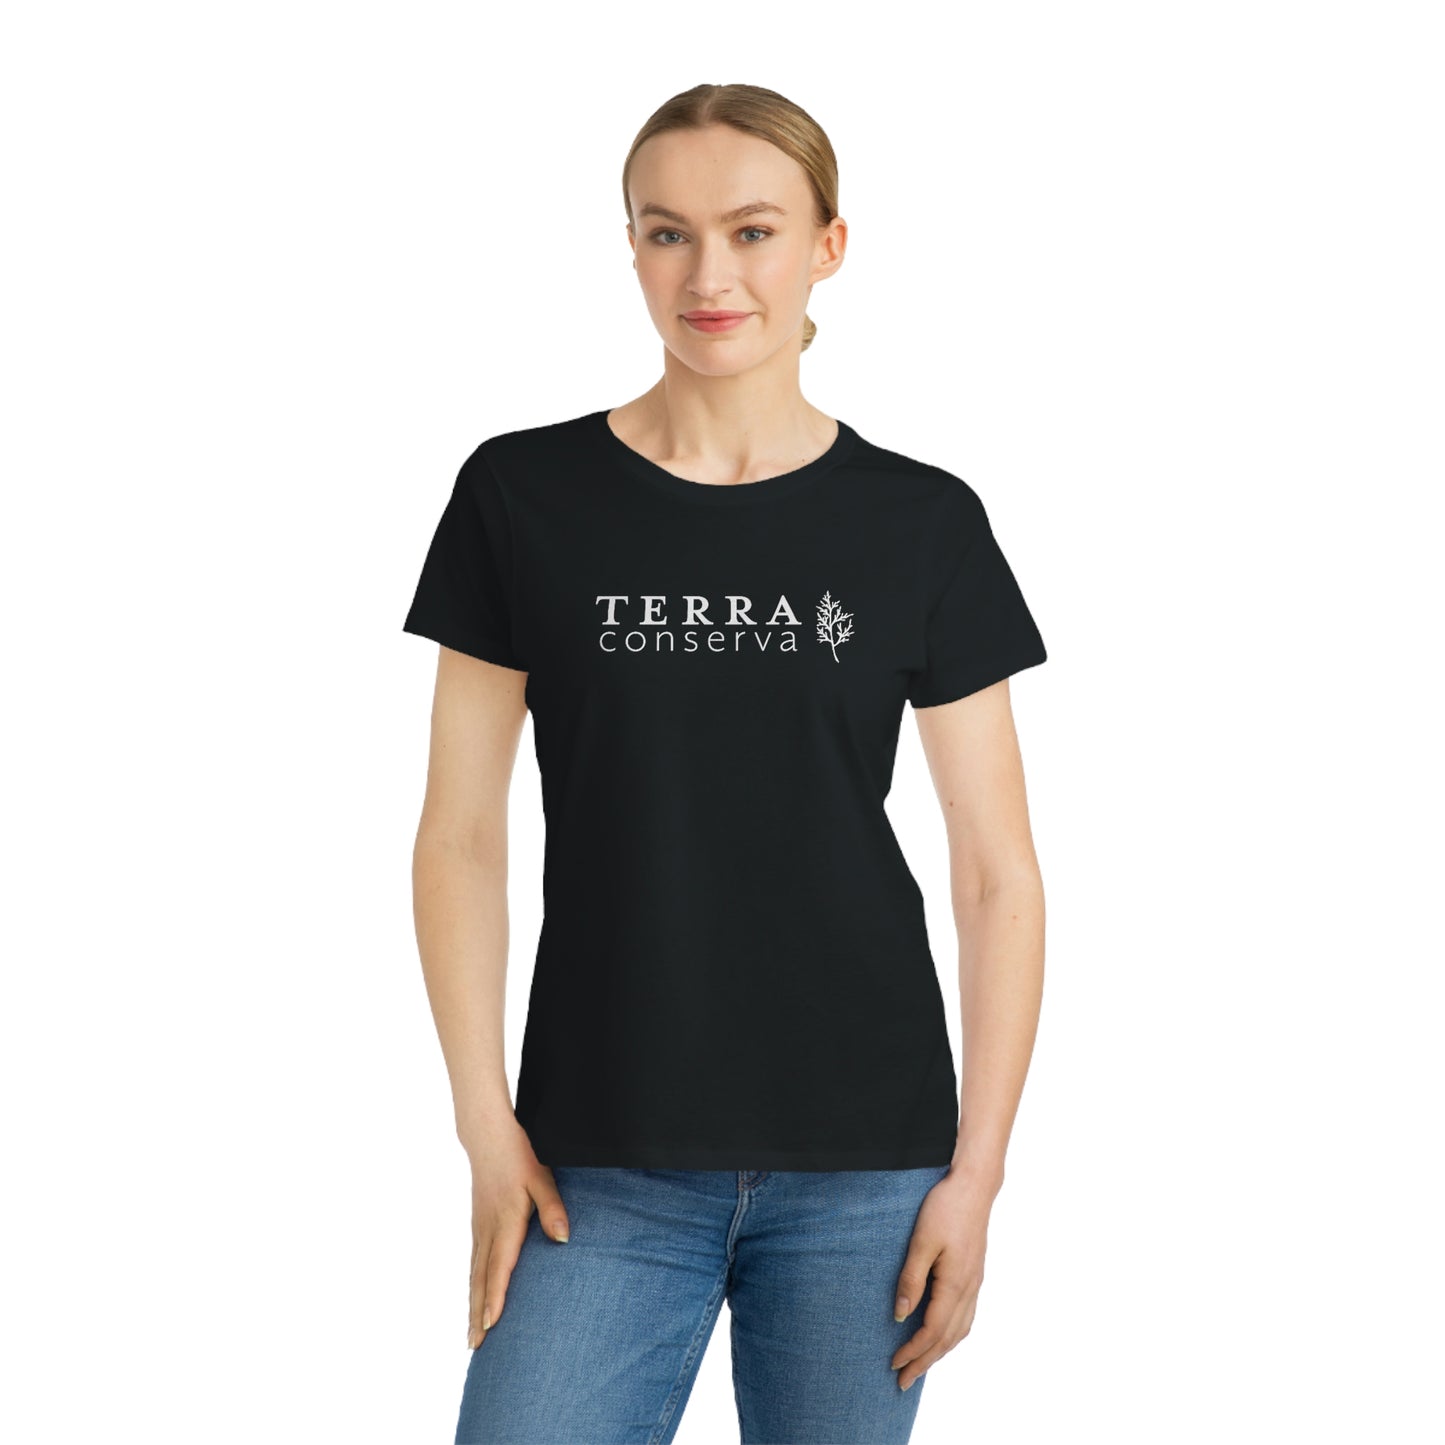 Terra Conserva Save the Earth Organic Cotton Women's T-Shirt